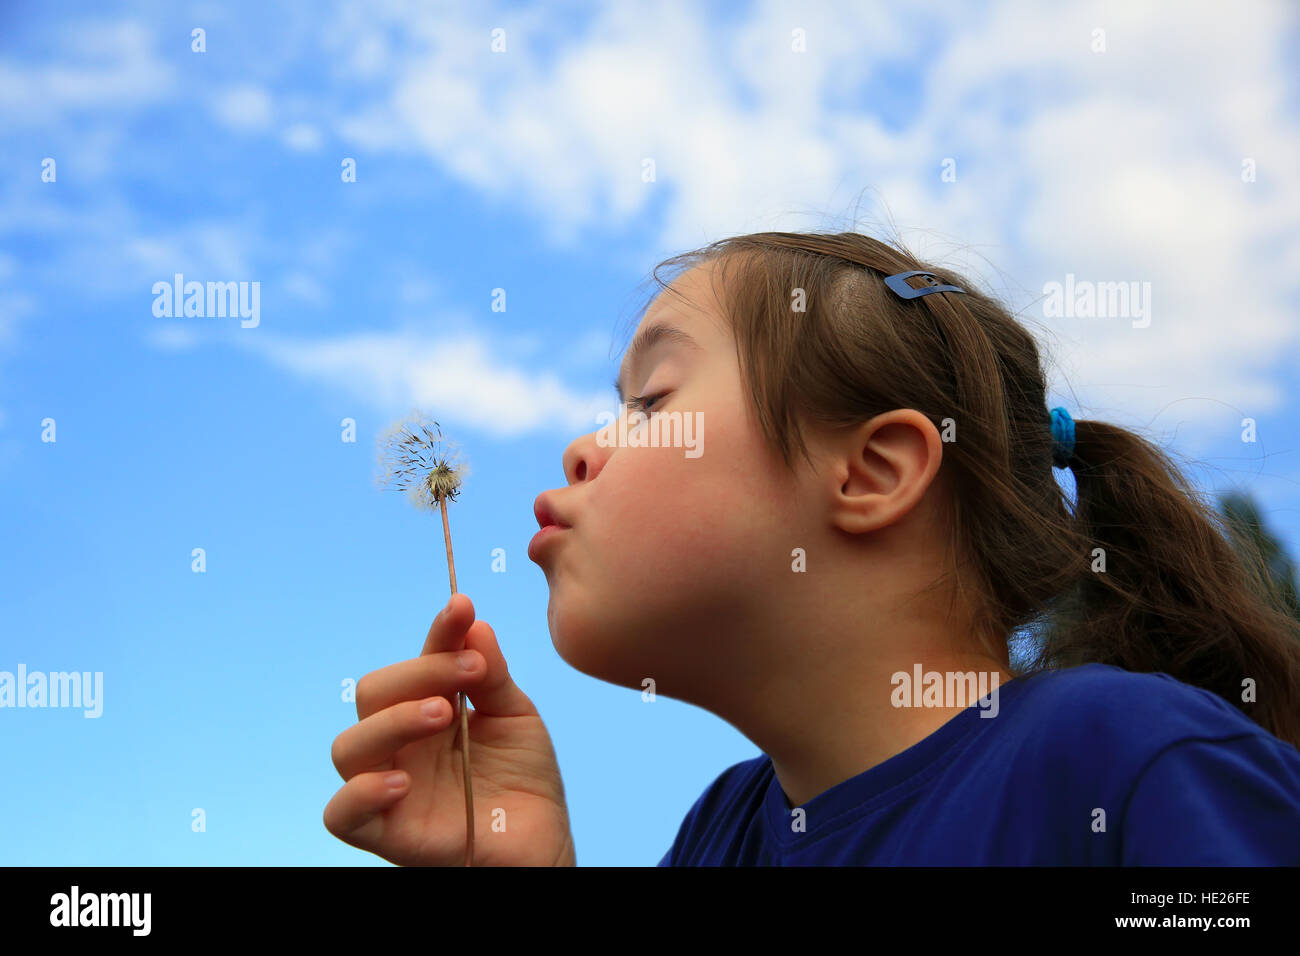 Little girl blowing dandelion Stock Photo